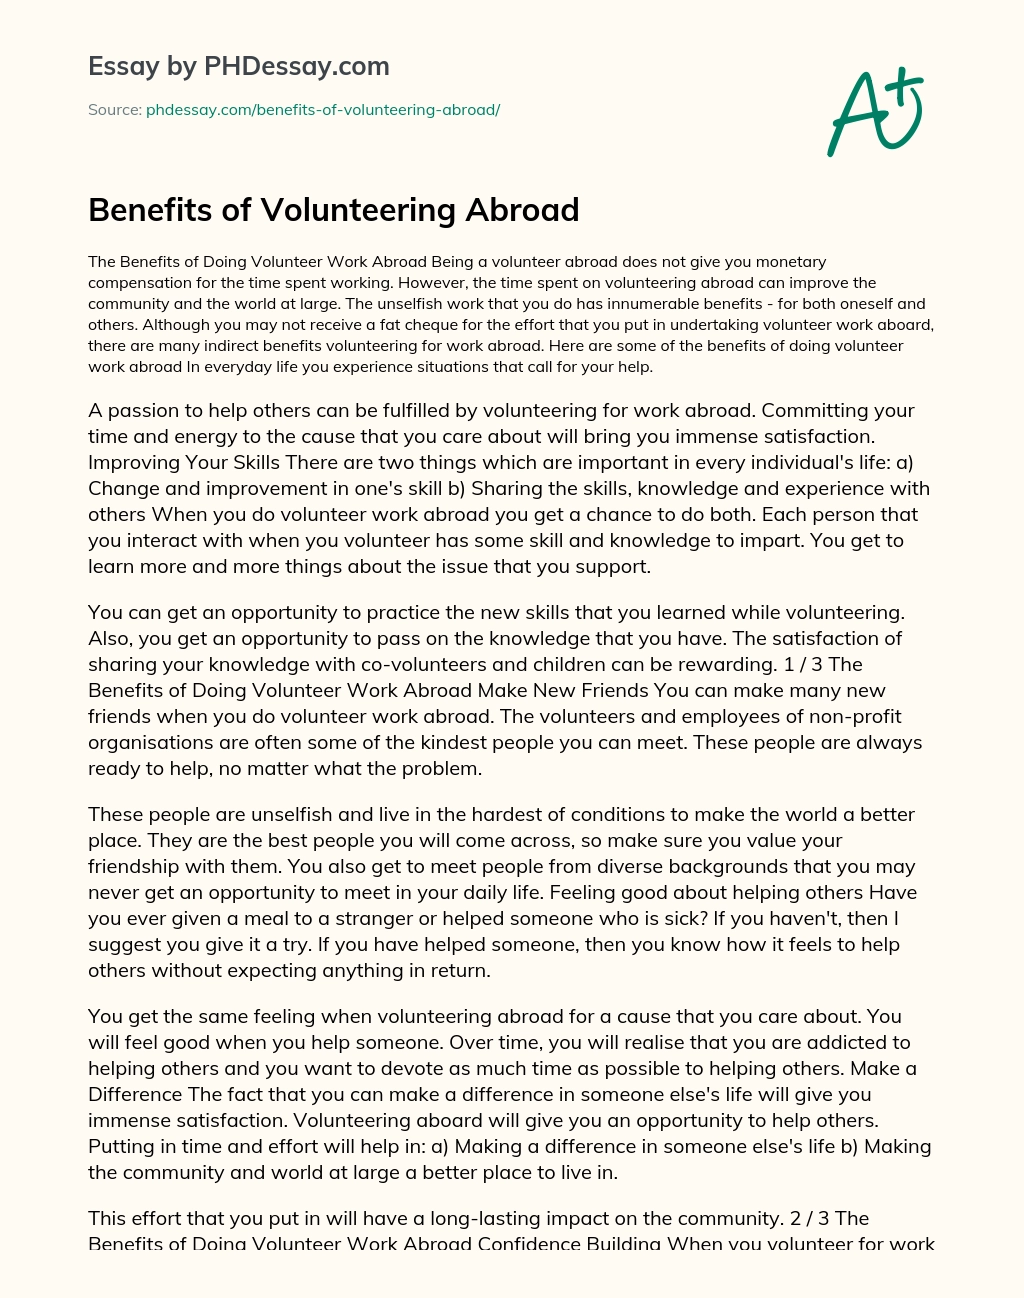 Benefits of volunteering abroad essay